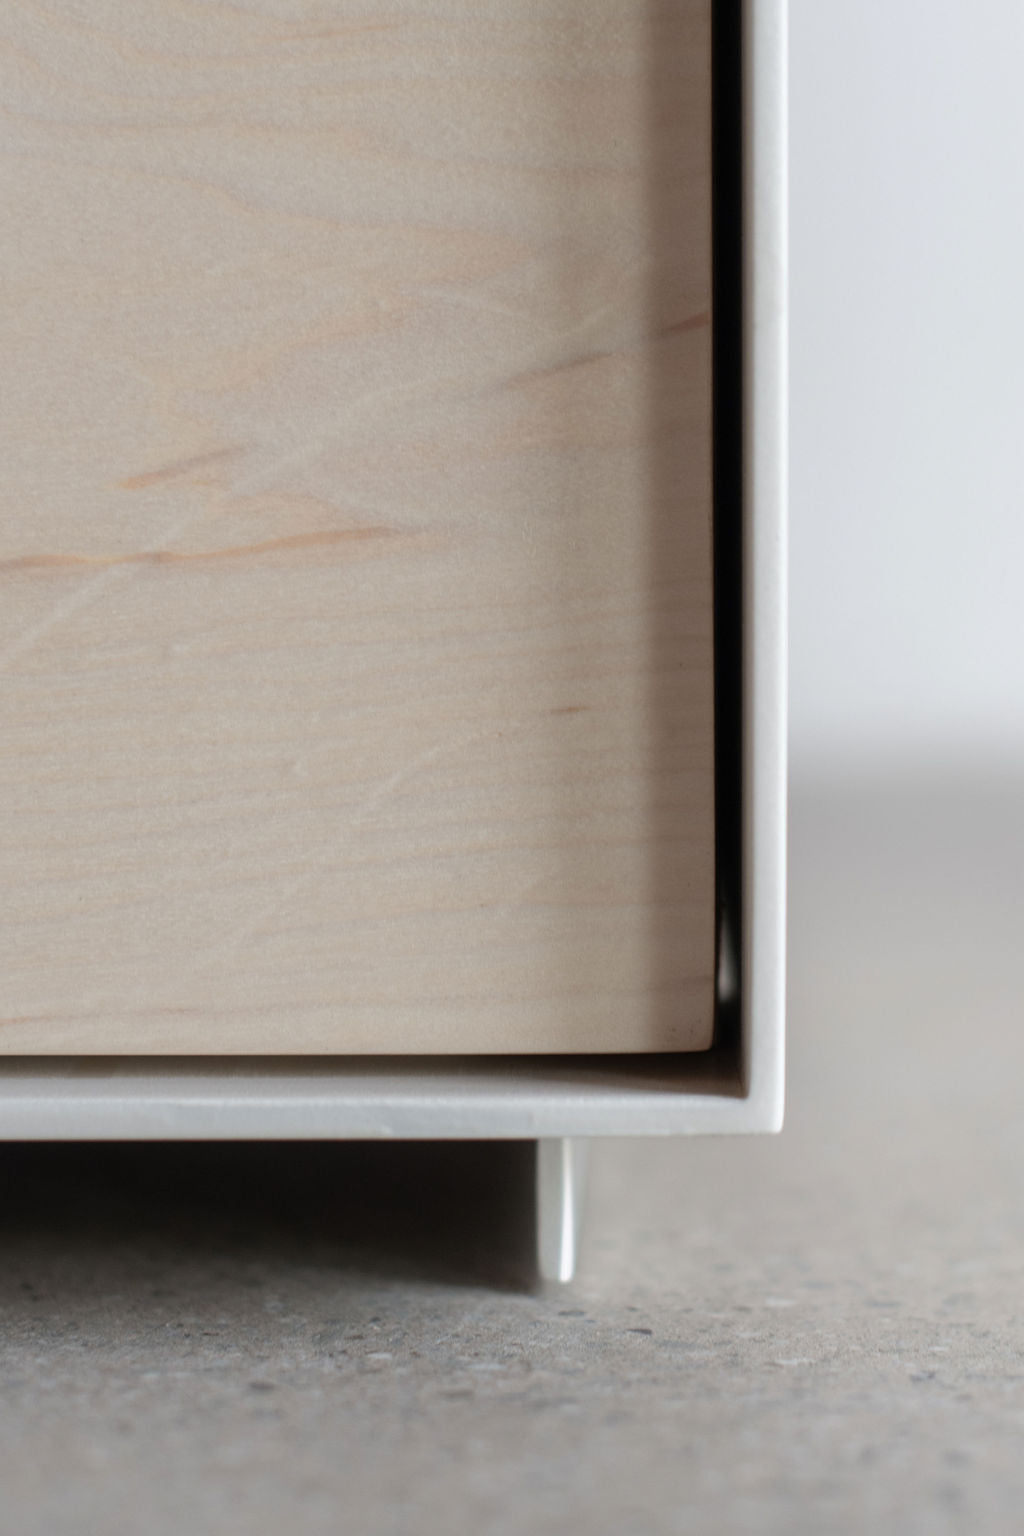 vista nightstand- steel casing with wood drawer